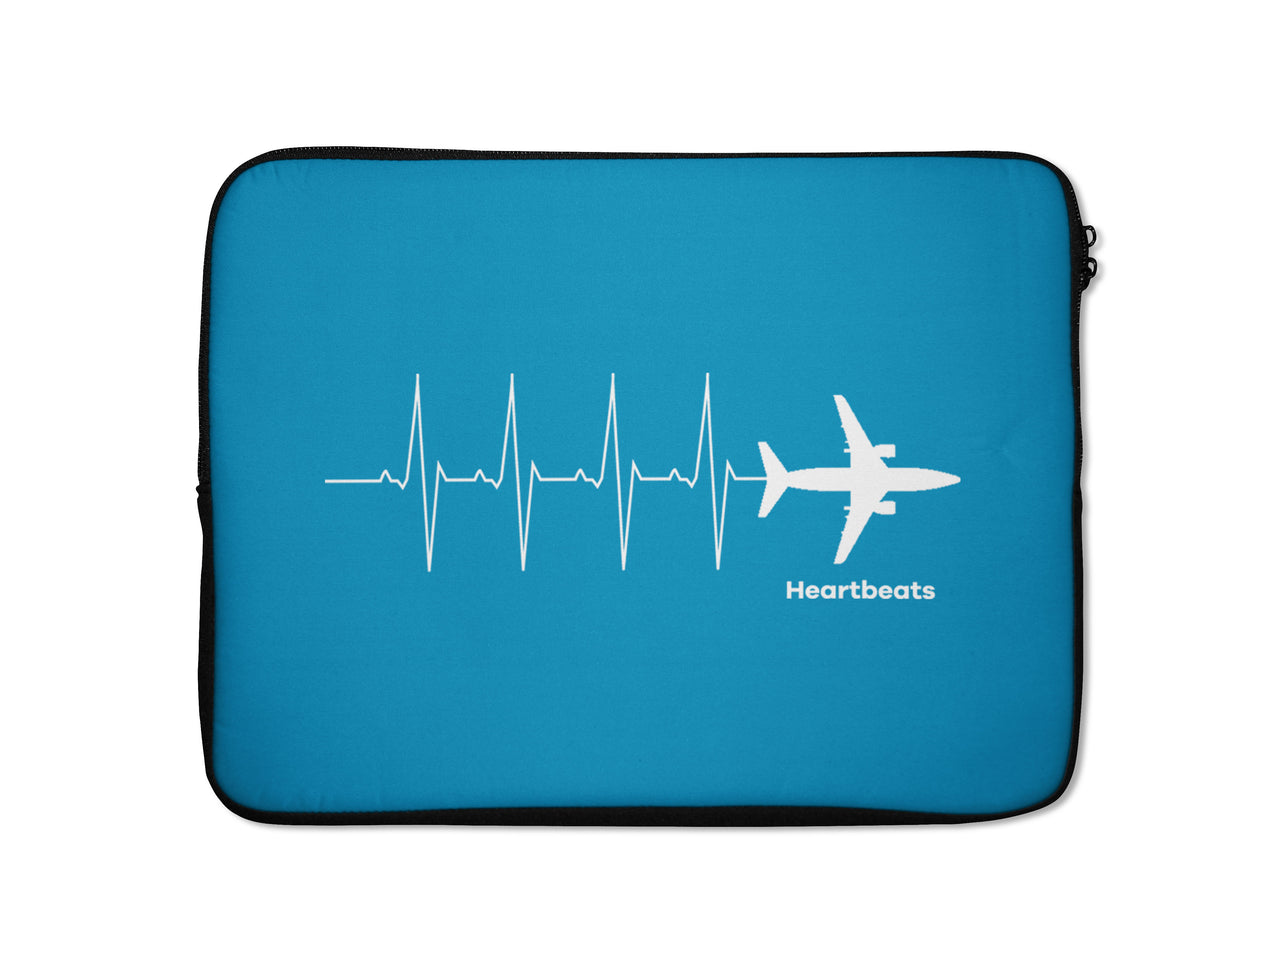 Aviation Heartbeats Designed Laptop & Tablet Cases